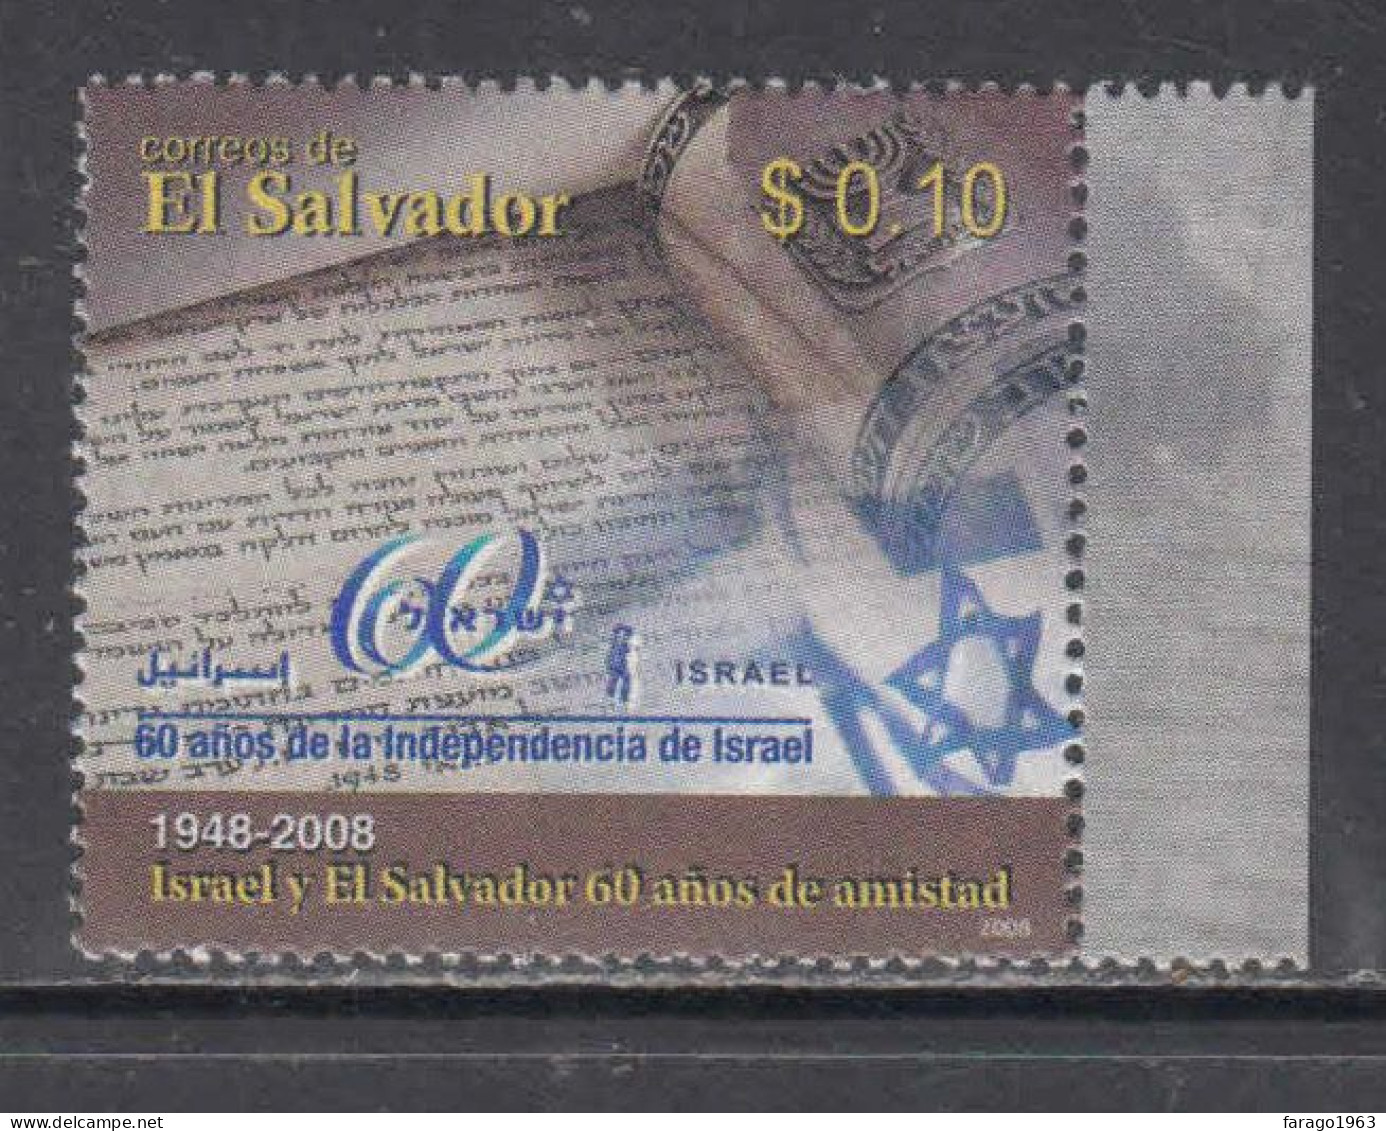 2008 El Salvador Israel Independence Flags Complete Set Of 1 MNH - El Salvador